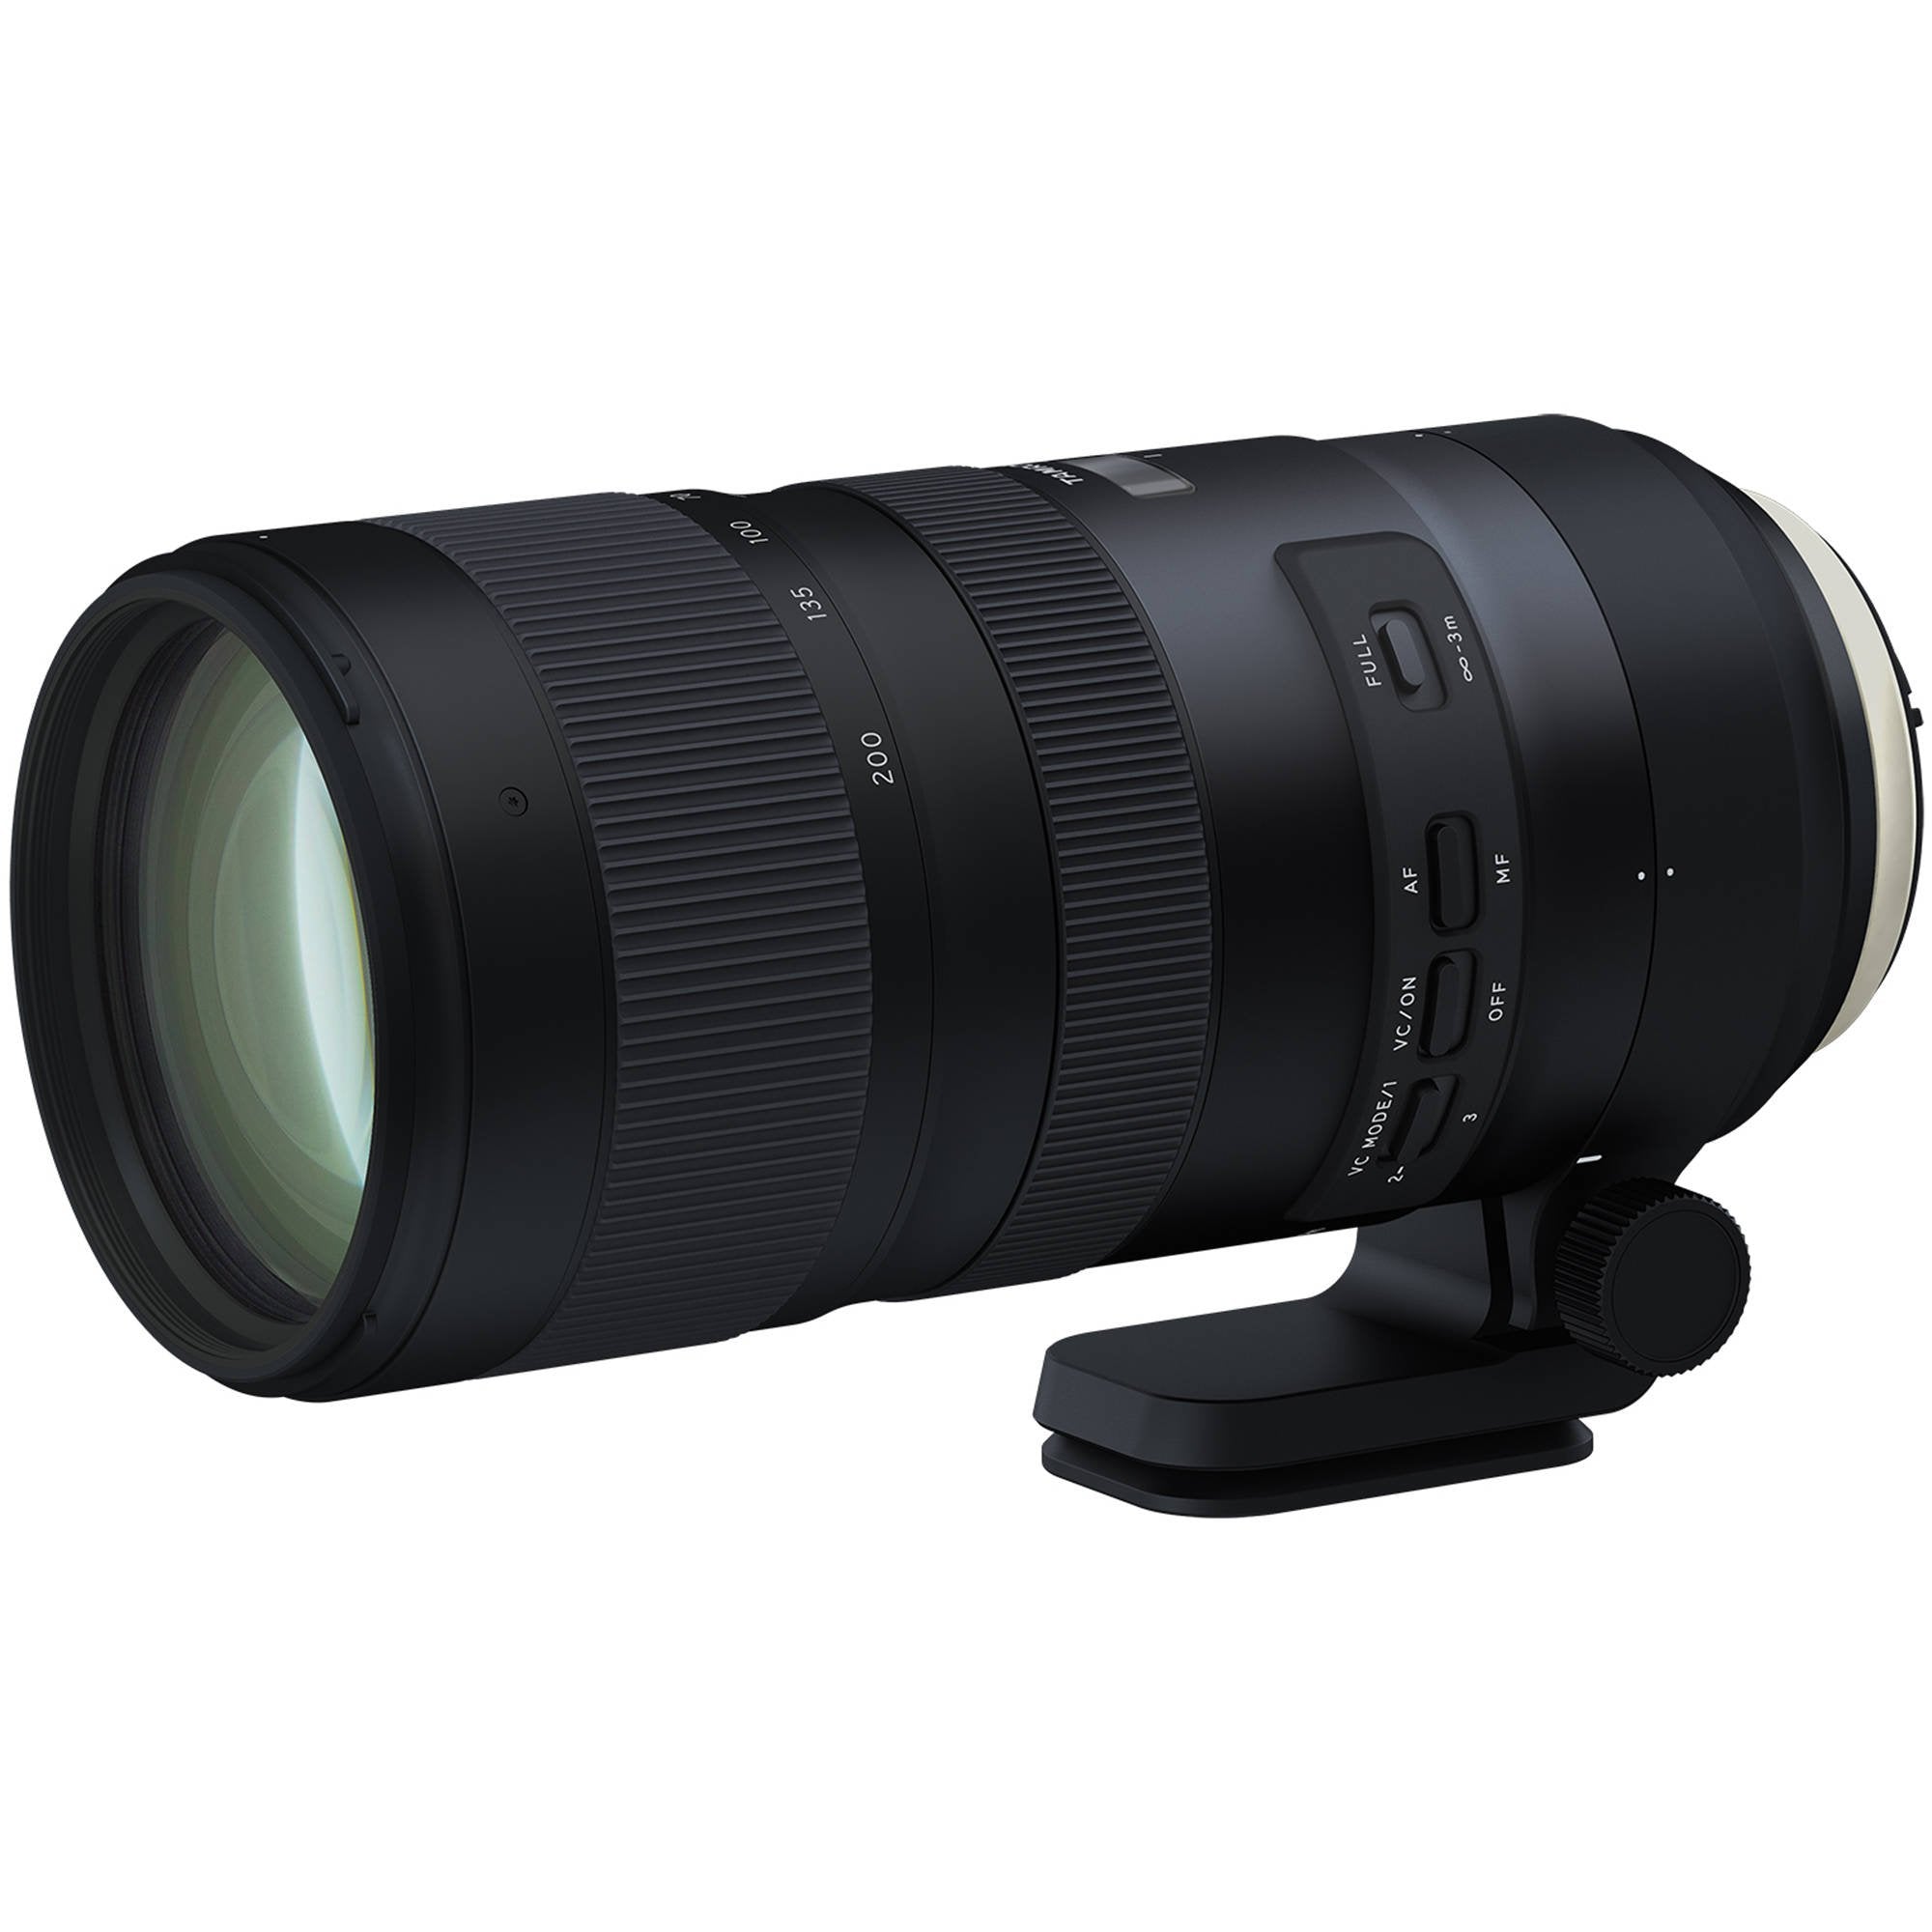 6Ave Tamron SP 70-200mm f/2.8 Di VC USD G2 Lens for Nikon F (International Model) + 77mm UV Filter + Lens Cap Keeper + M